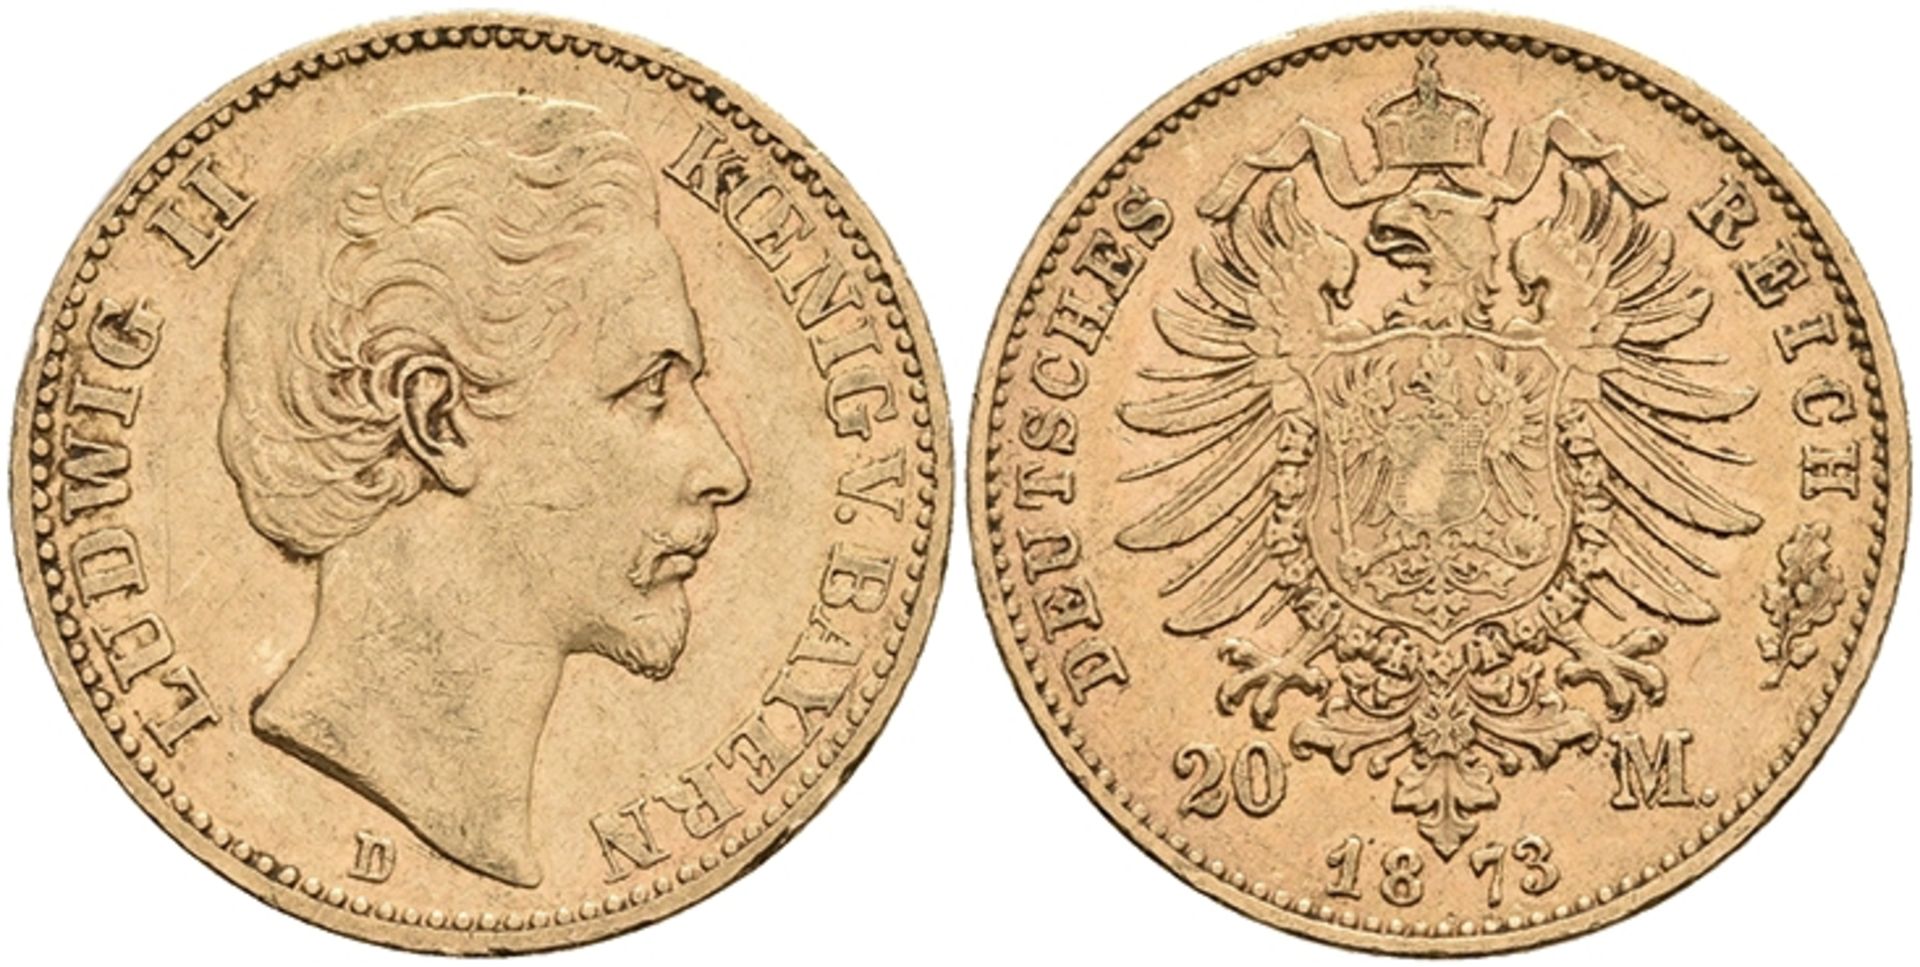 20 Mark, 1873, Ludwig II., kl. Rf., ss. J. 194